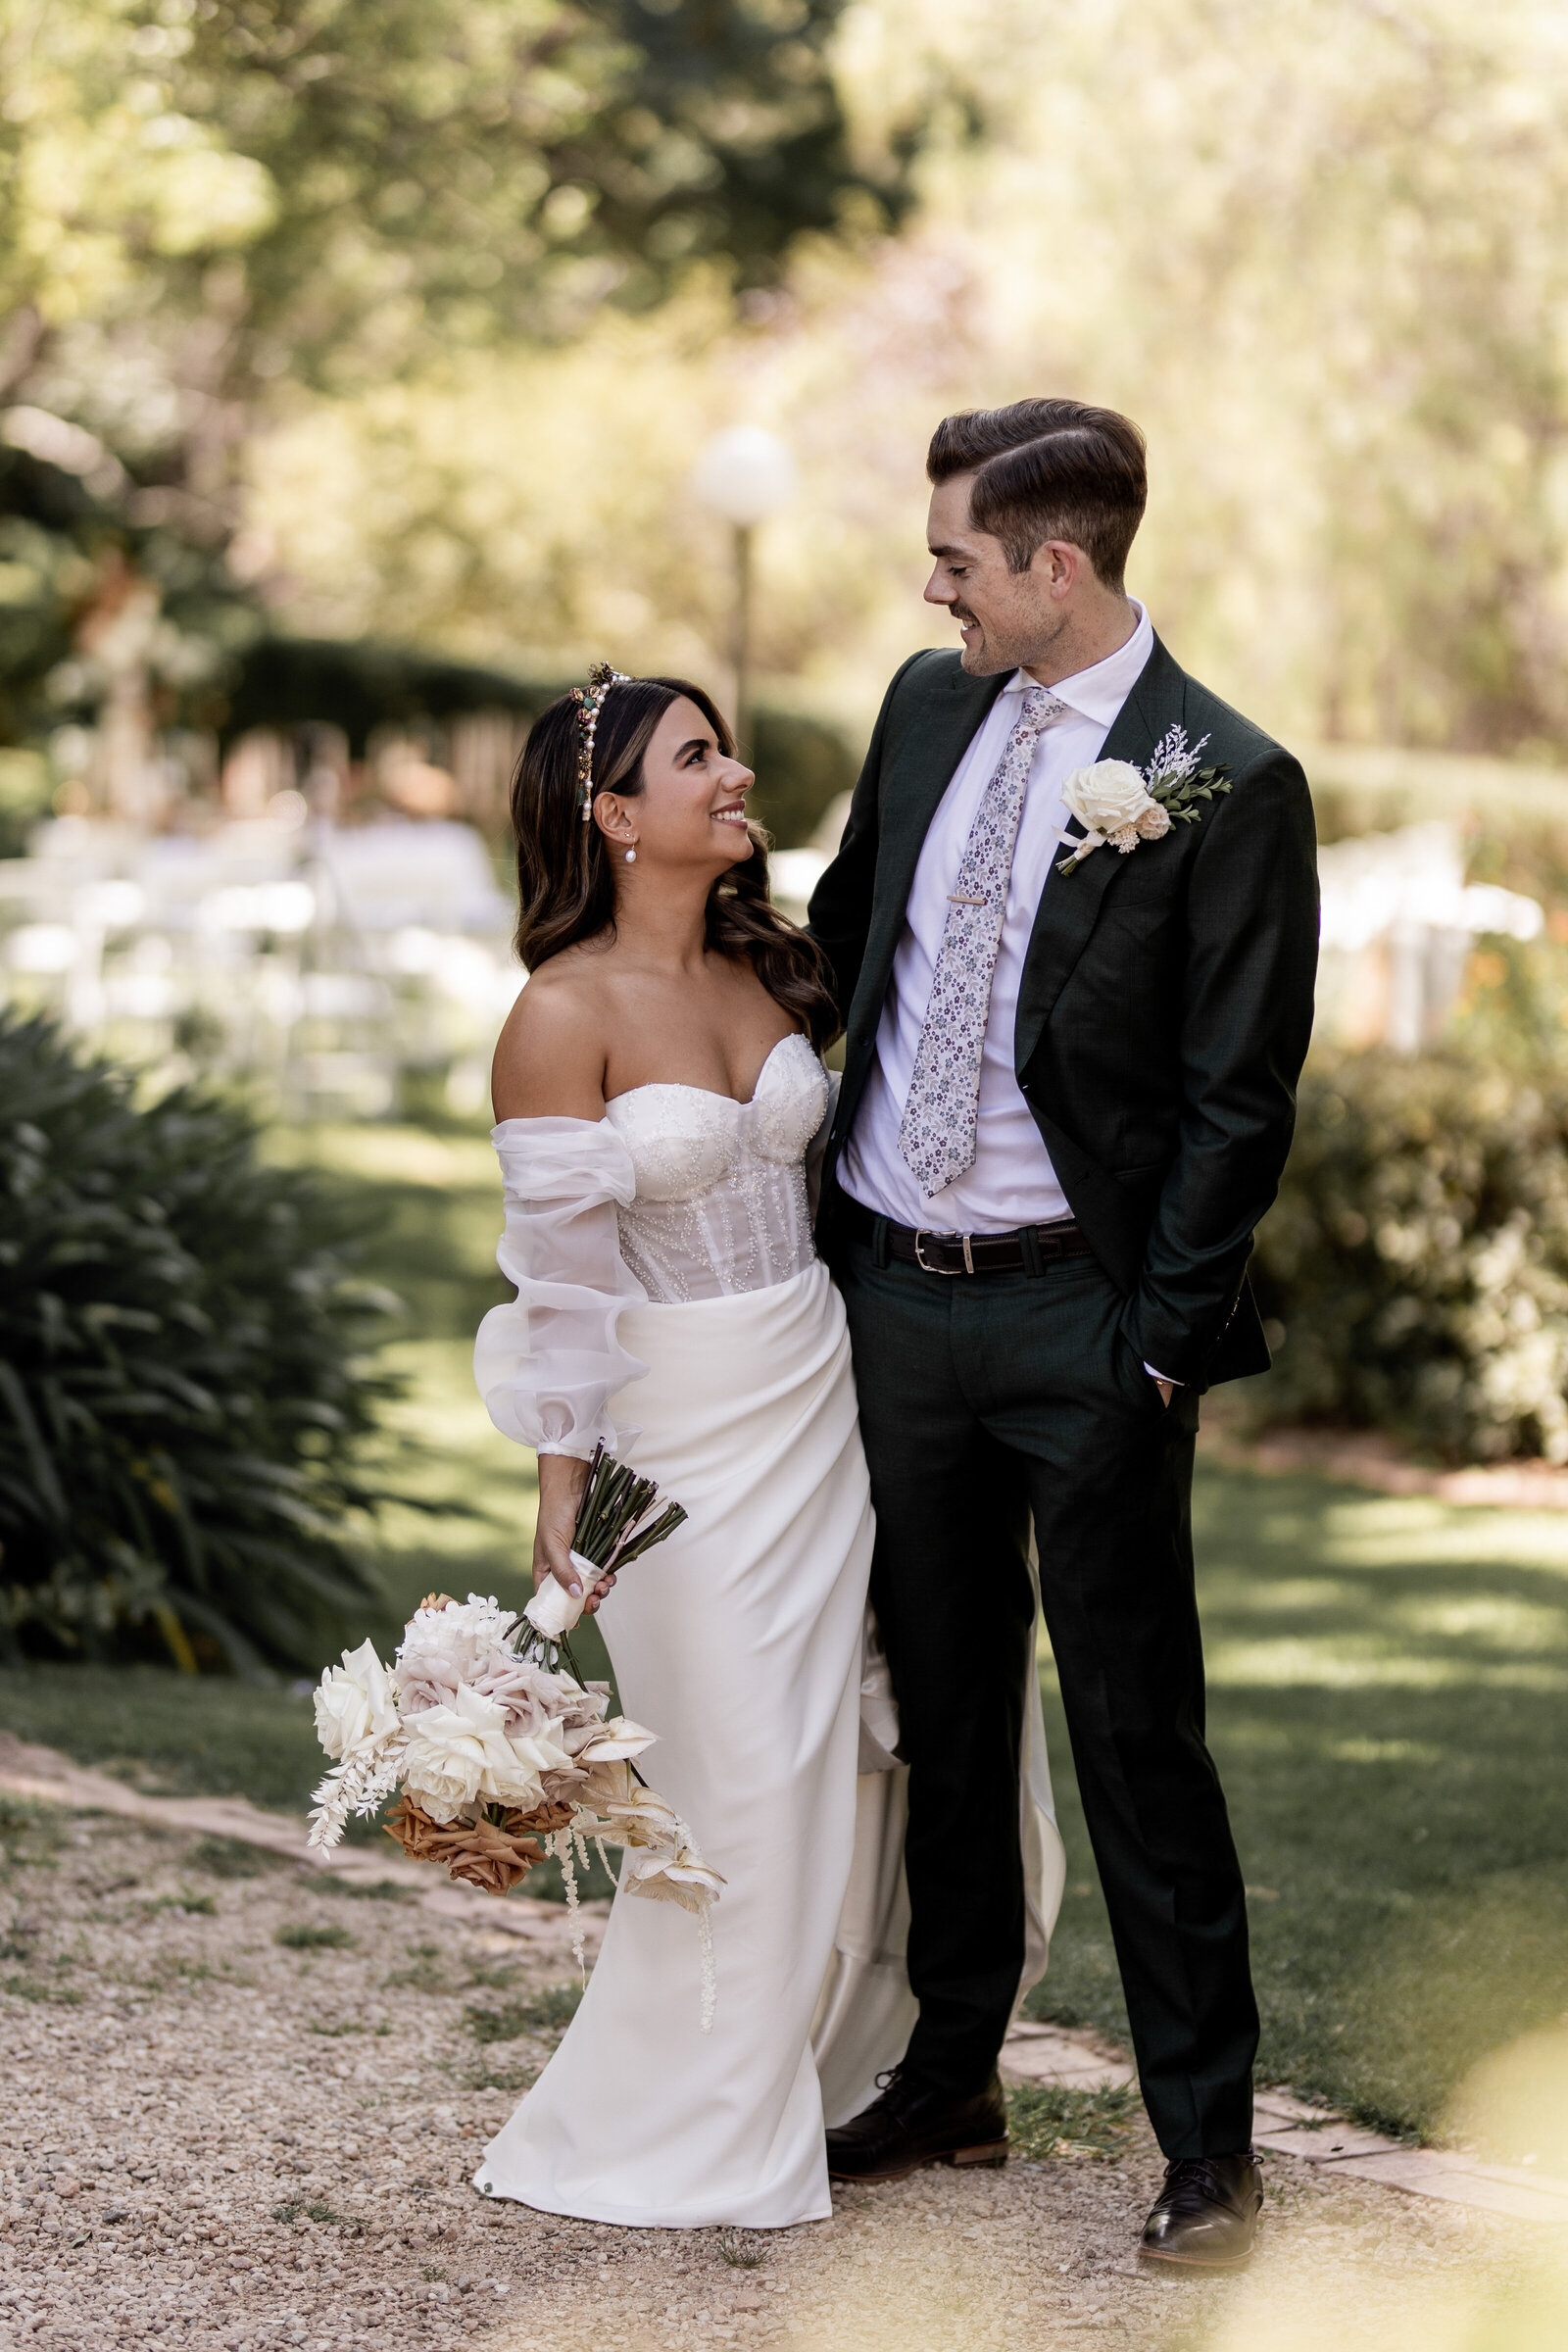 Parmida-Charlie-Adelaide-Wedding-Photographer-Rexvil-Photography-310